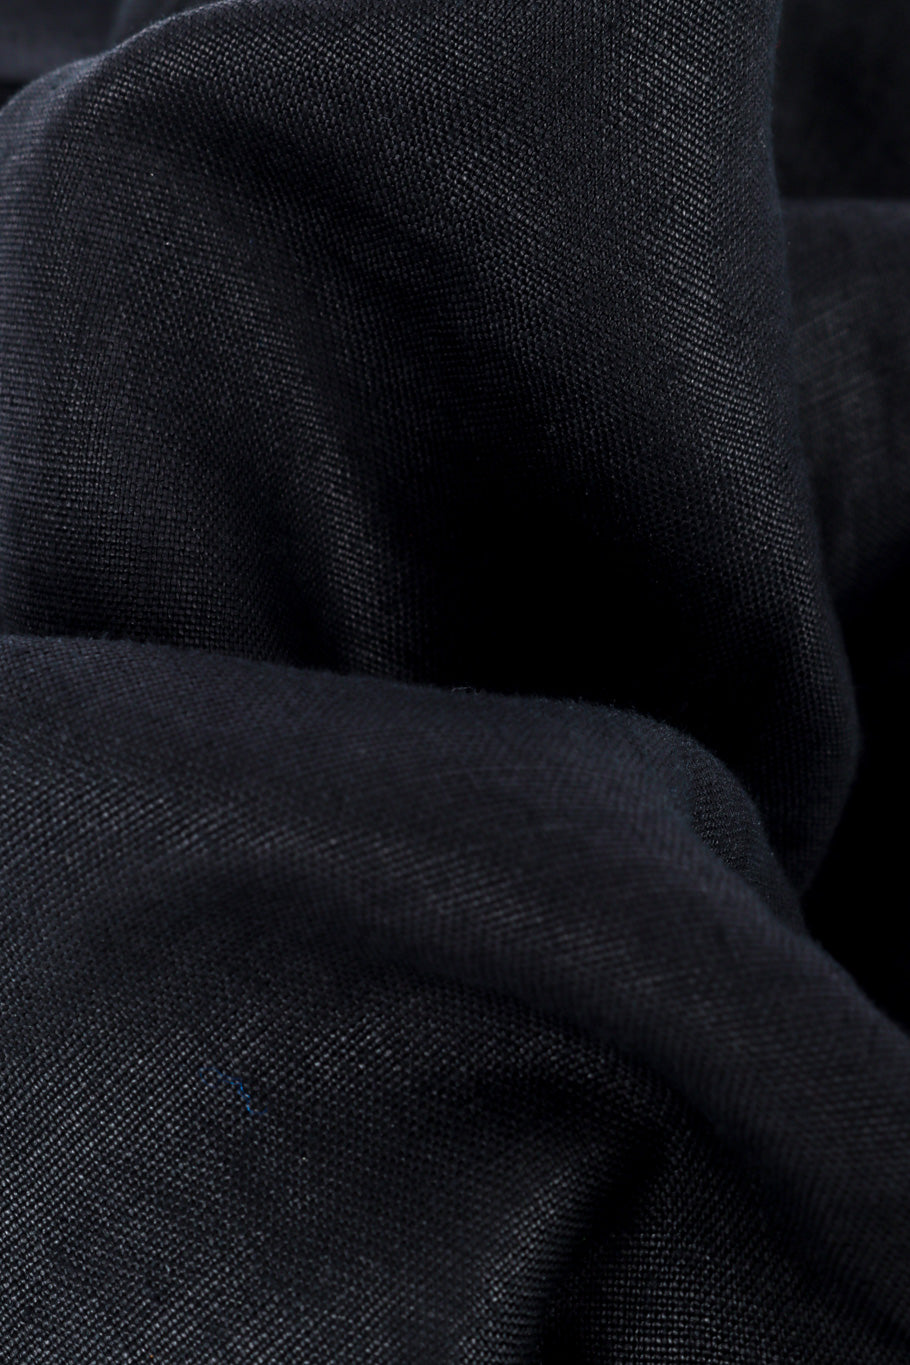 Vintage Chanel CC Button Linen Shirt fabric closeup @recessla